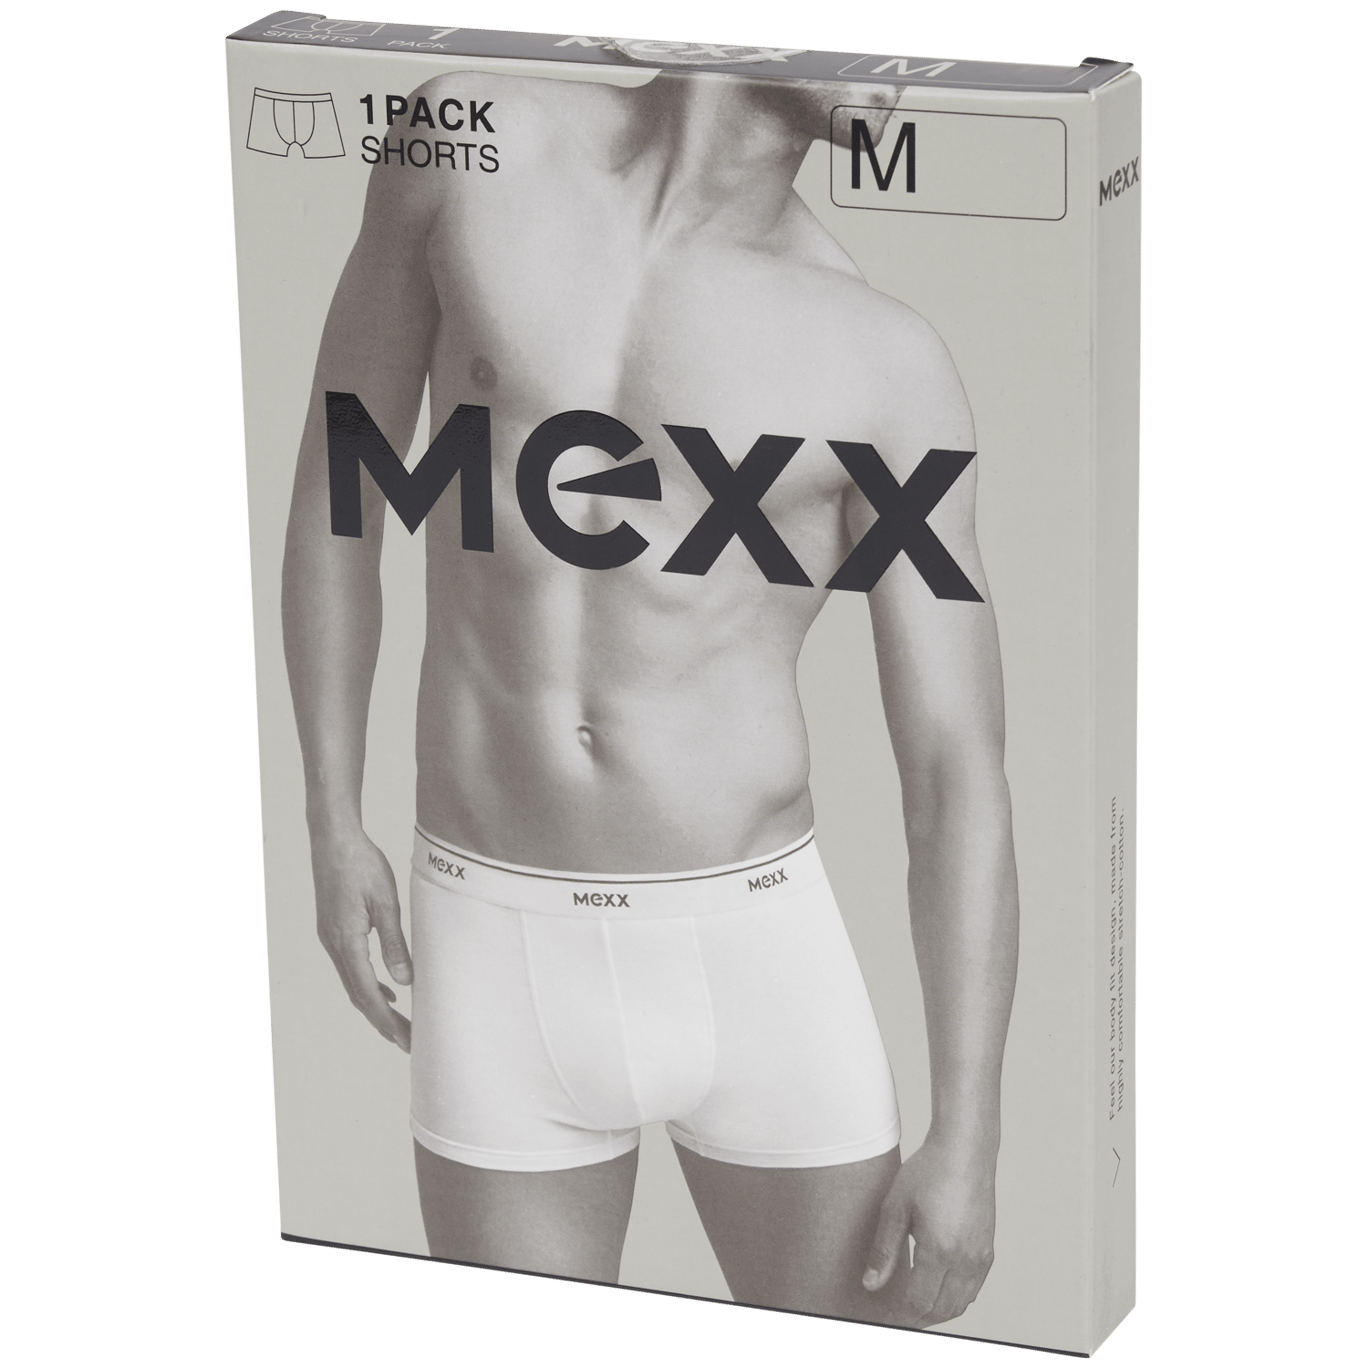 Mexx boxershort